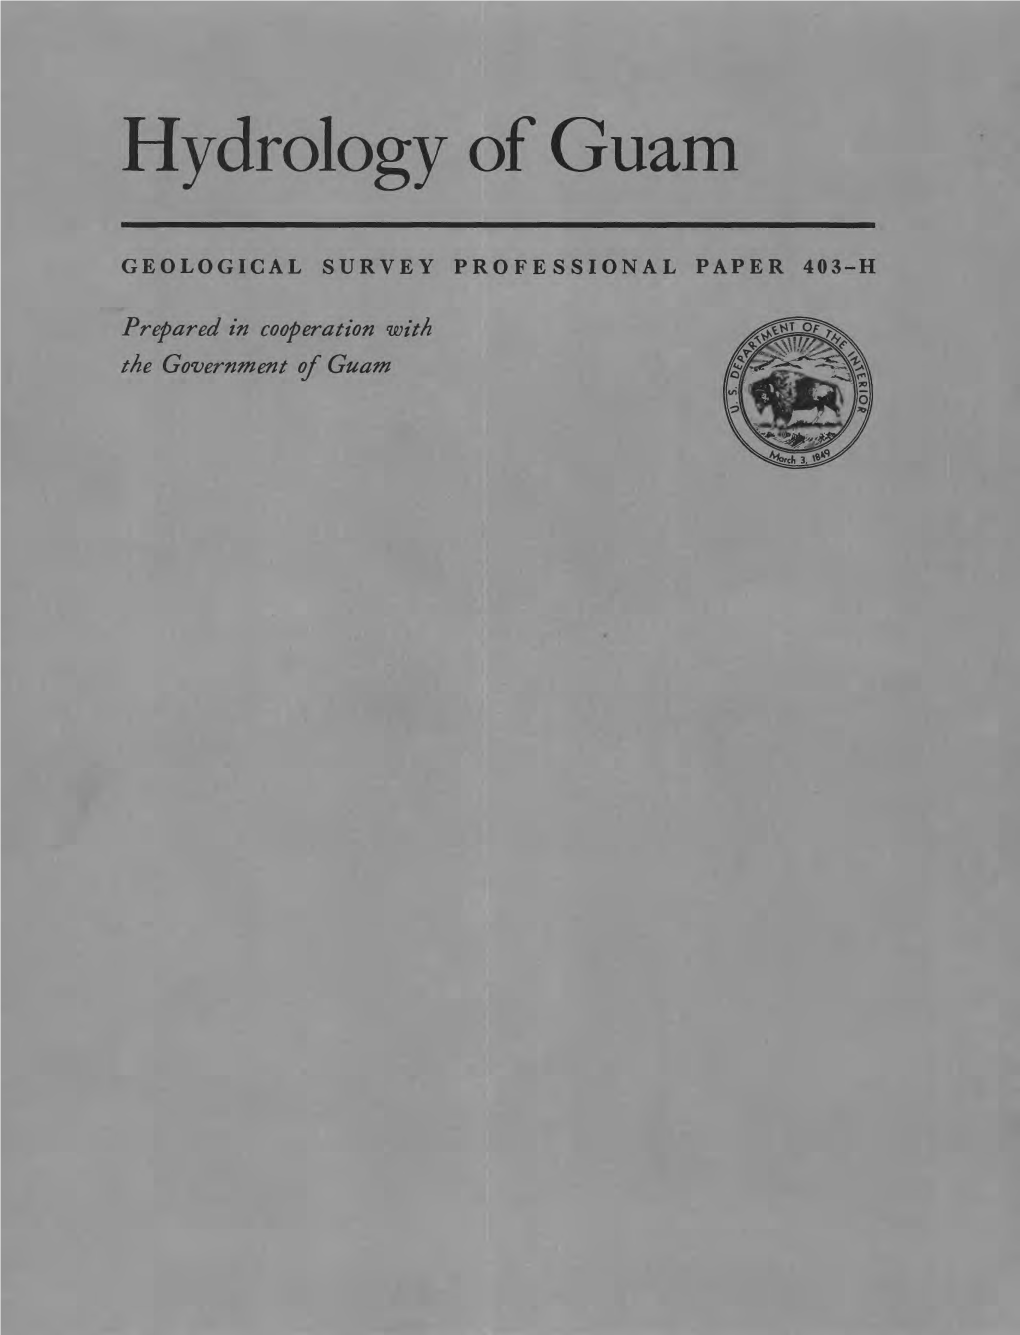 Hydrology of Guam